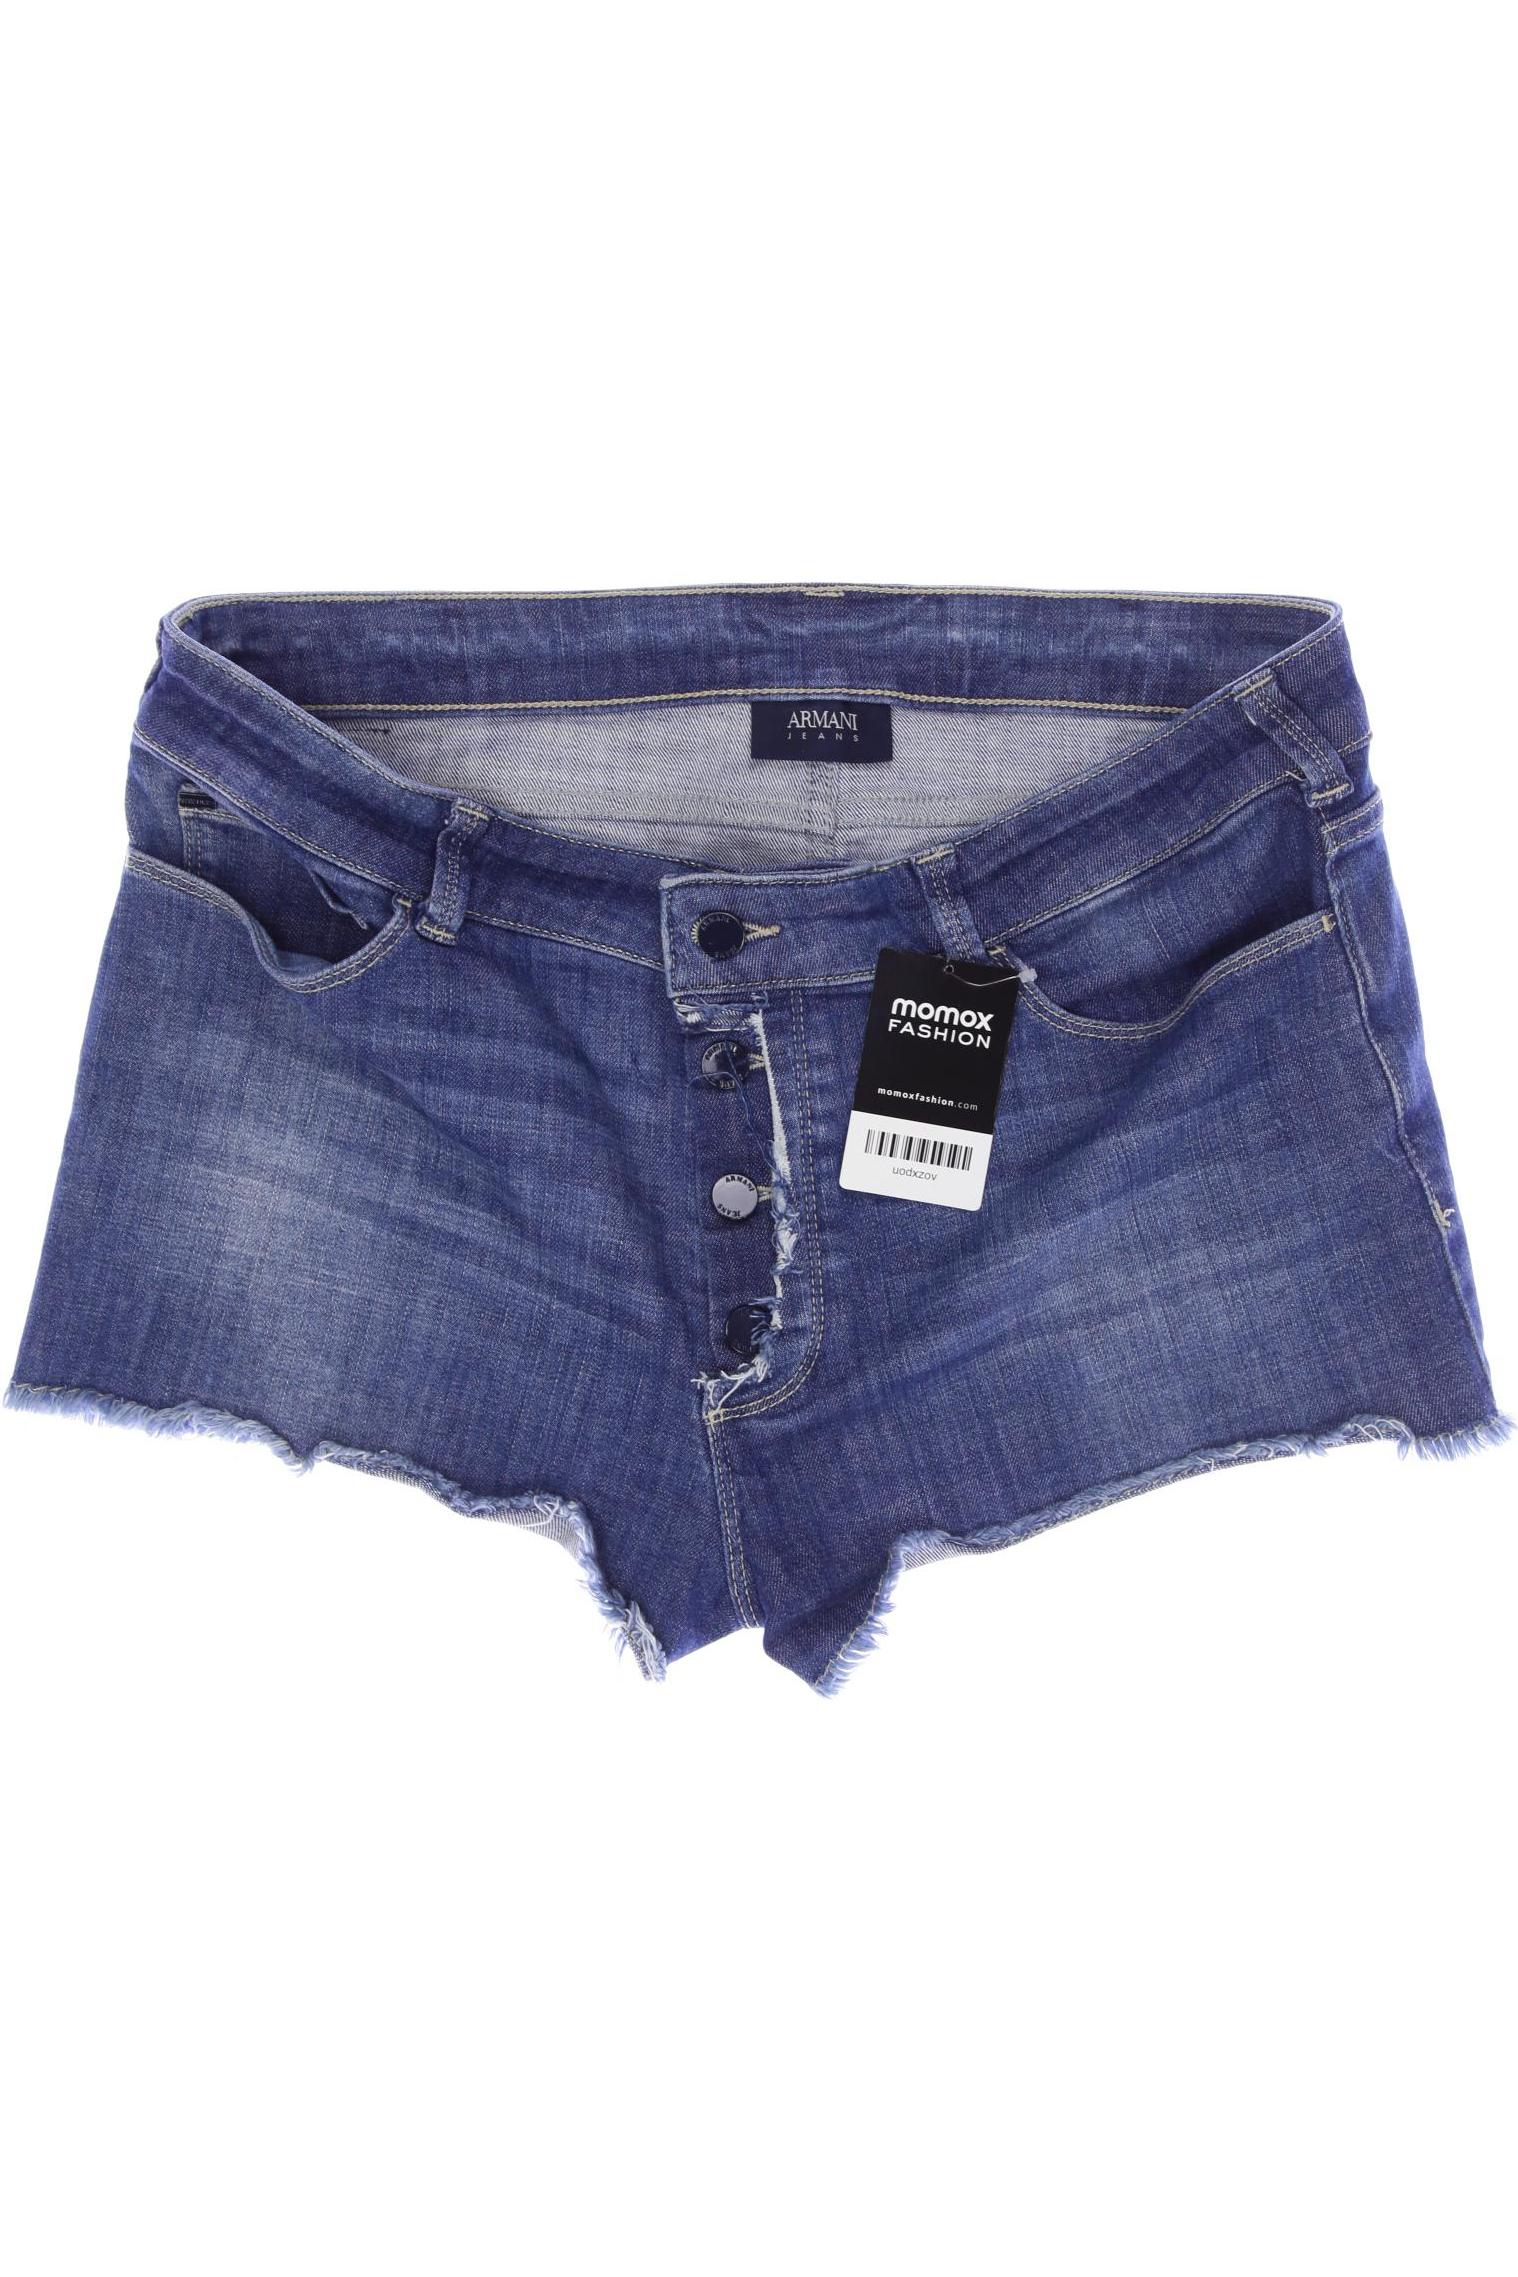 Armani Jeans Damen Shorts, blau von Armani Jeans